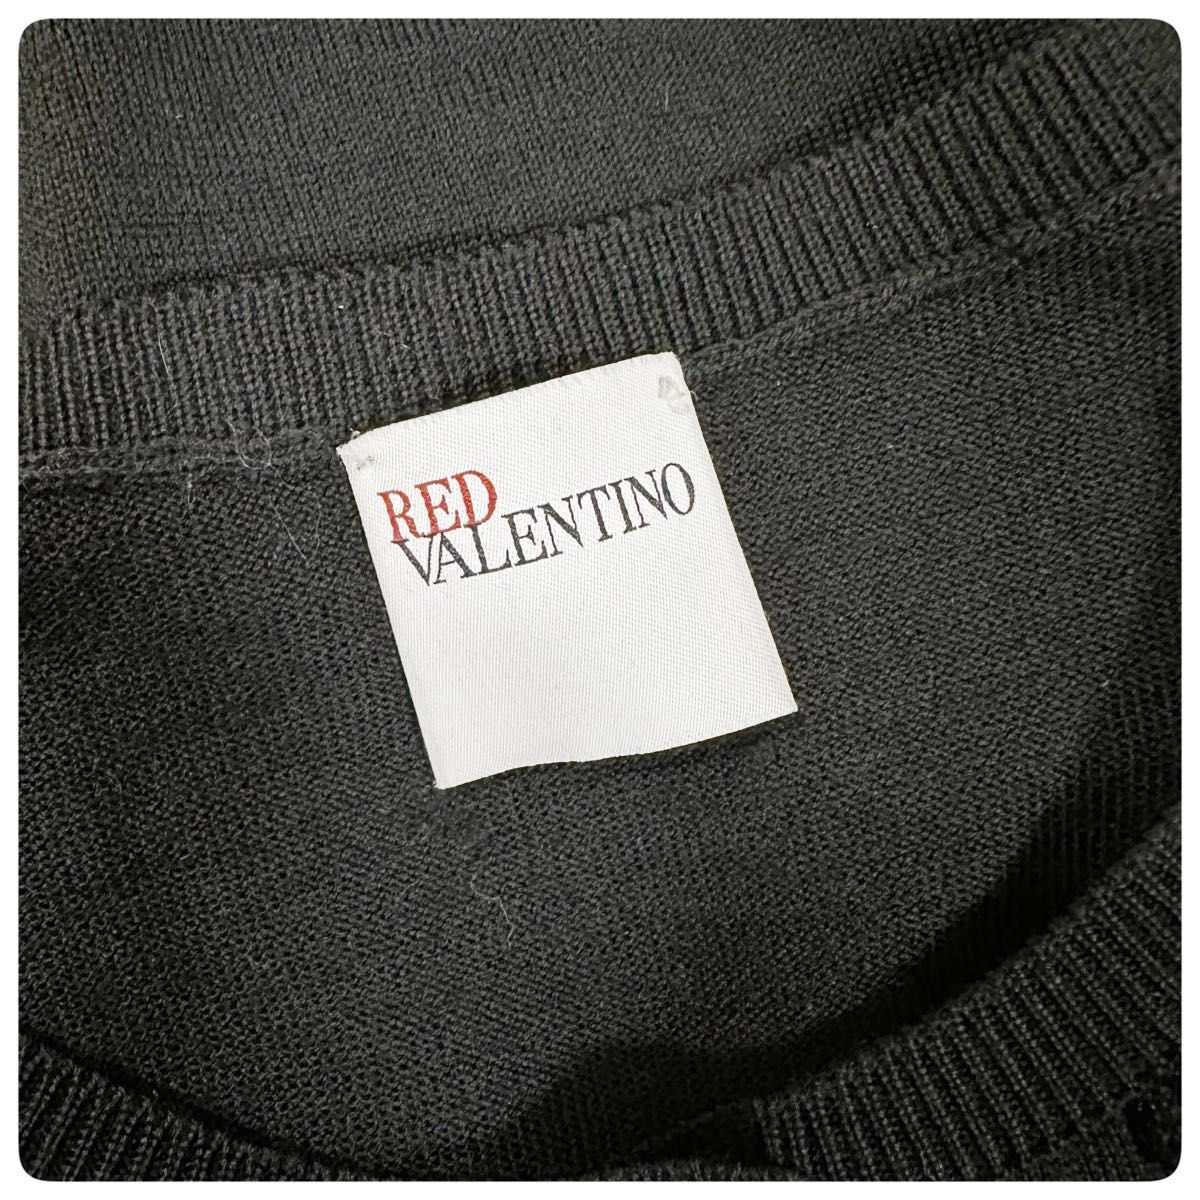 RED VALENTINO レッドヴァレンティノ フリルレースニットカーディガン